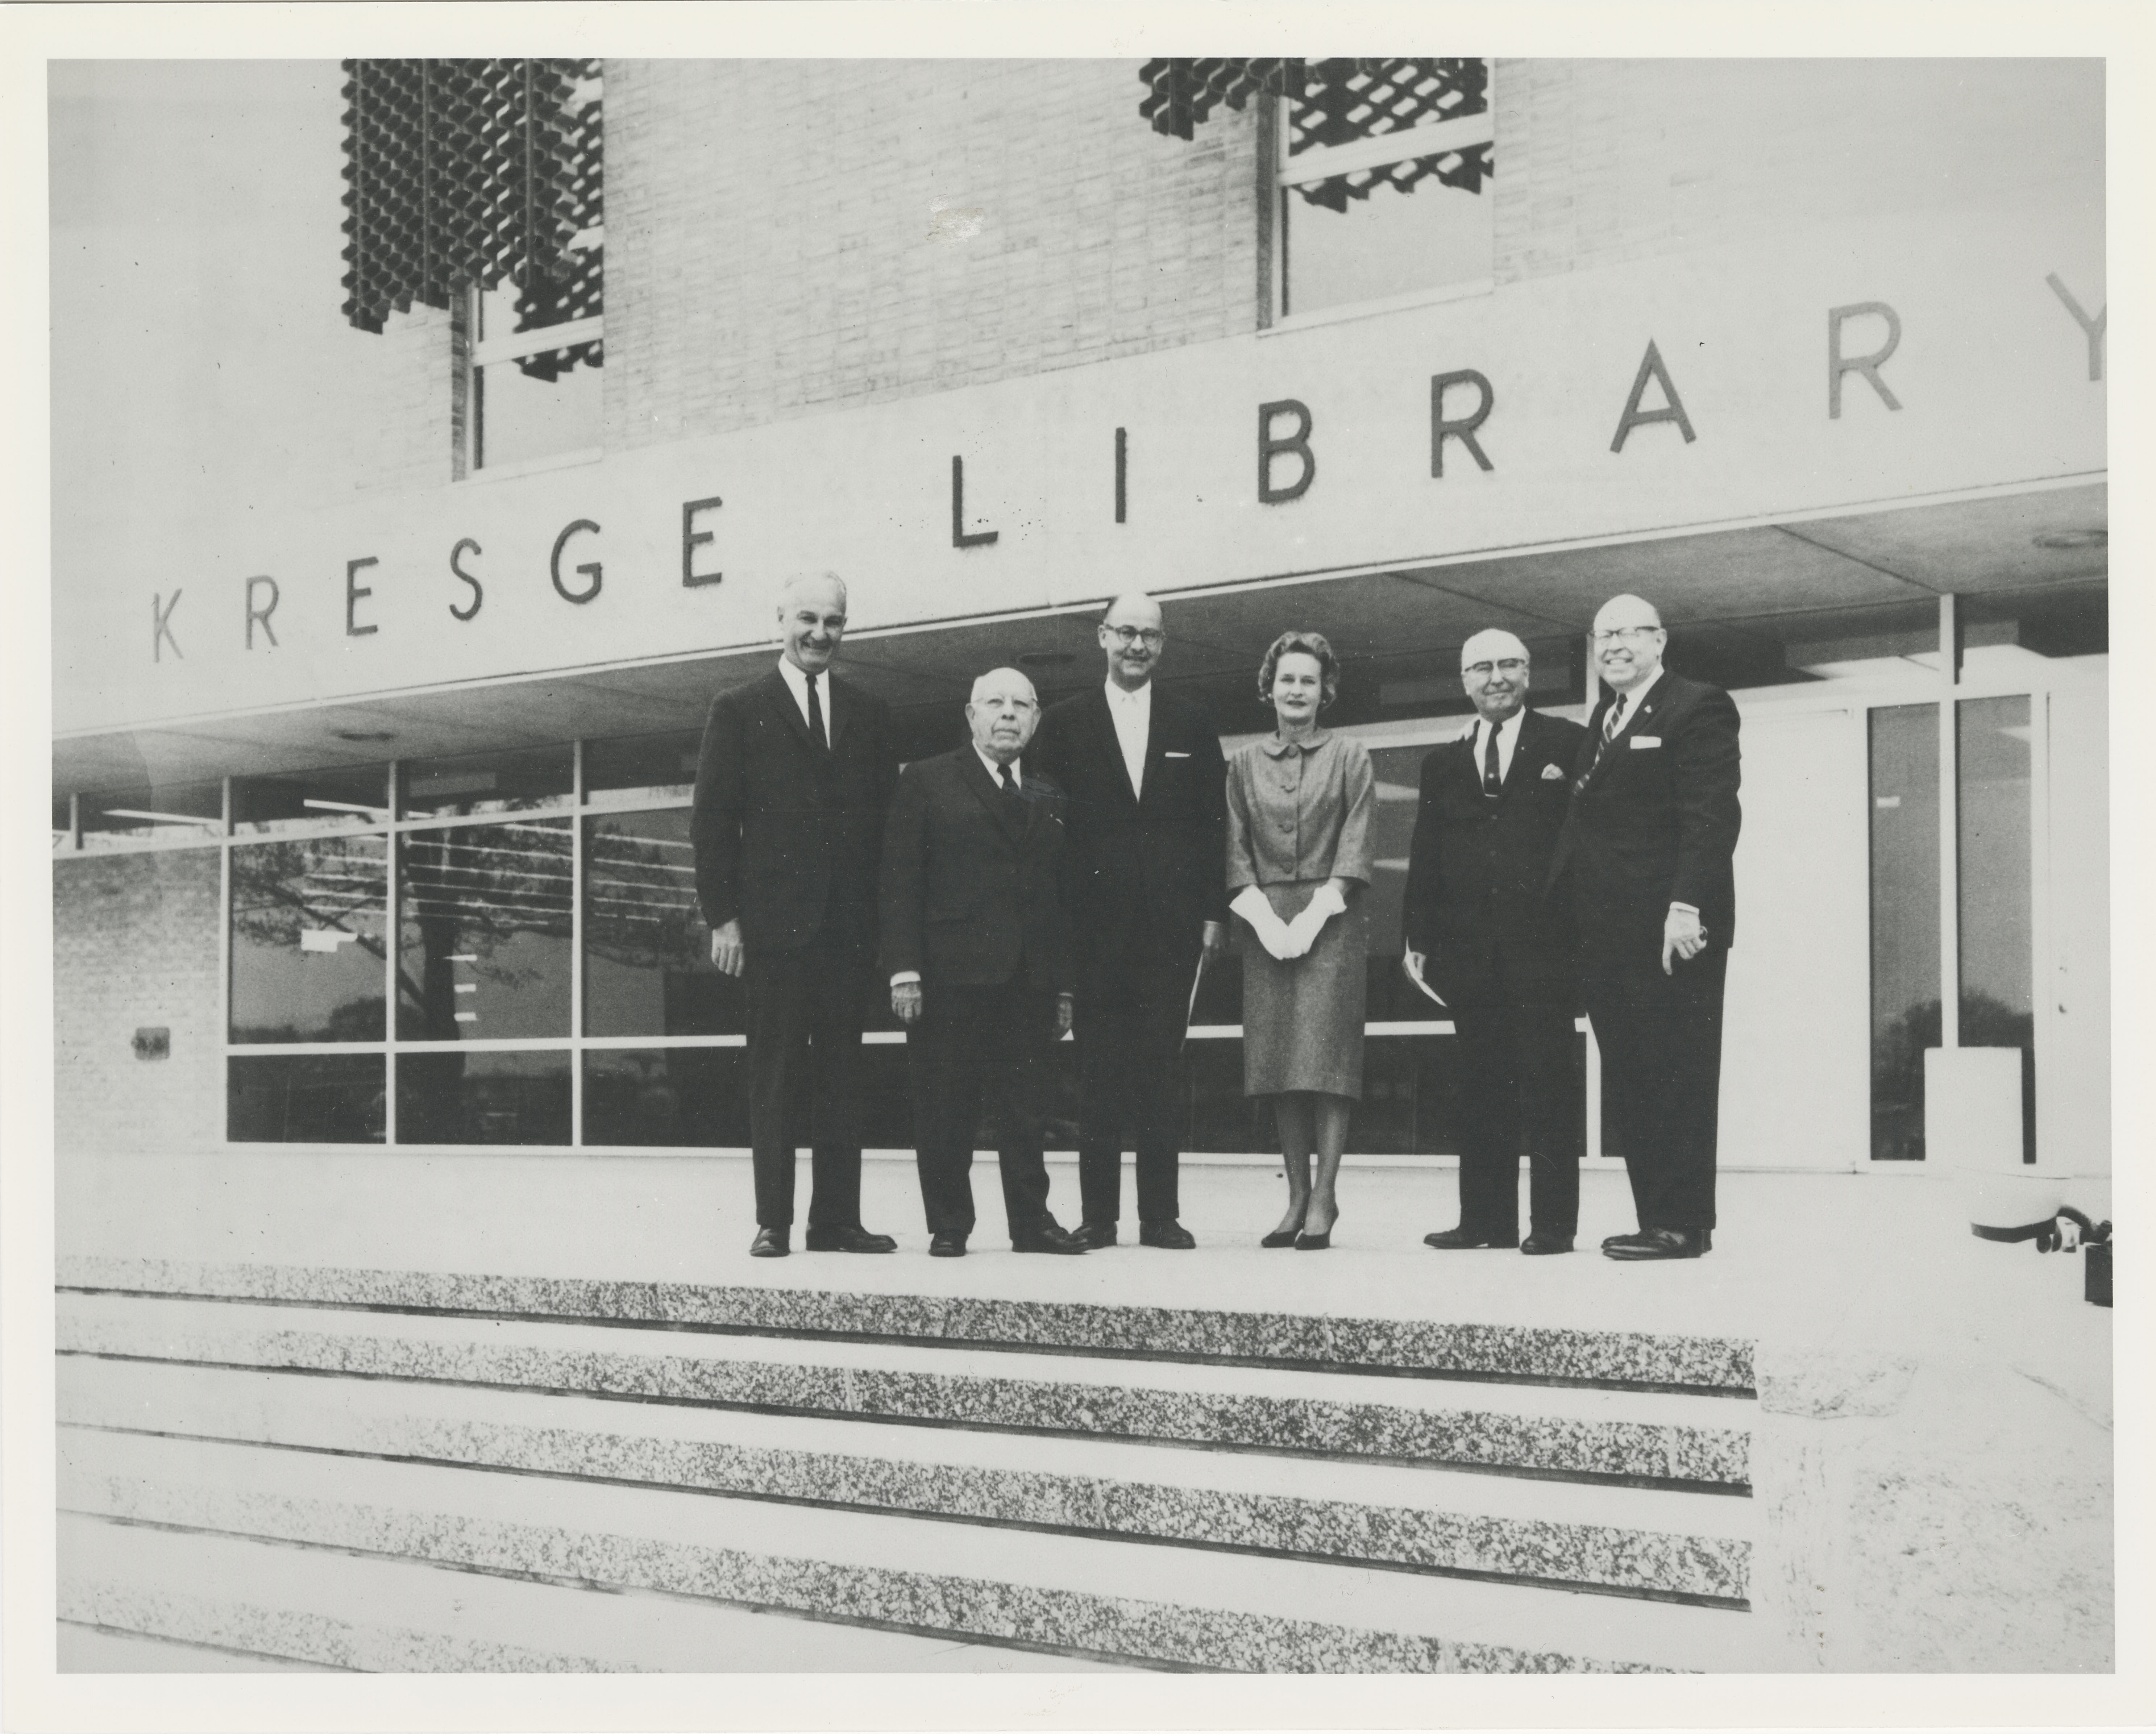 Kresge Library dedication